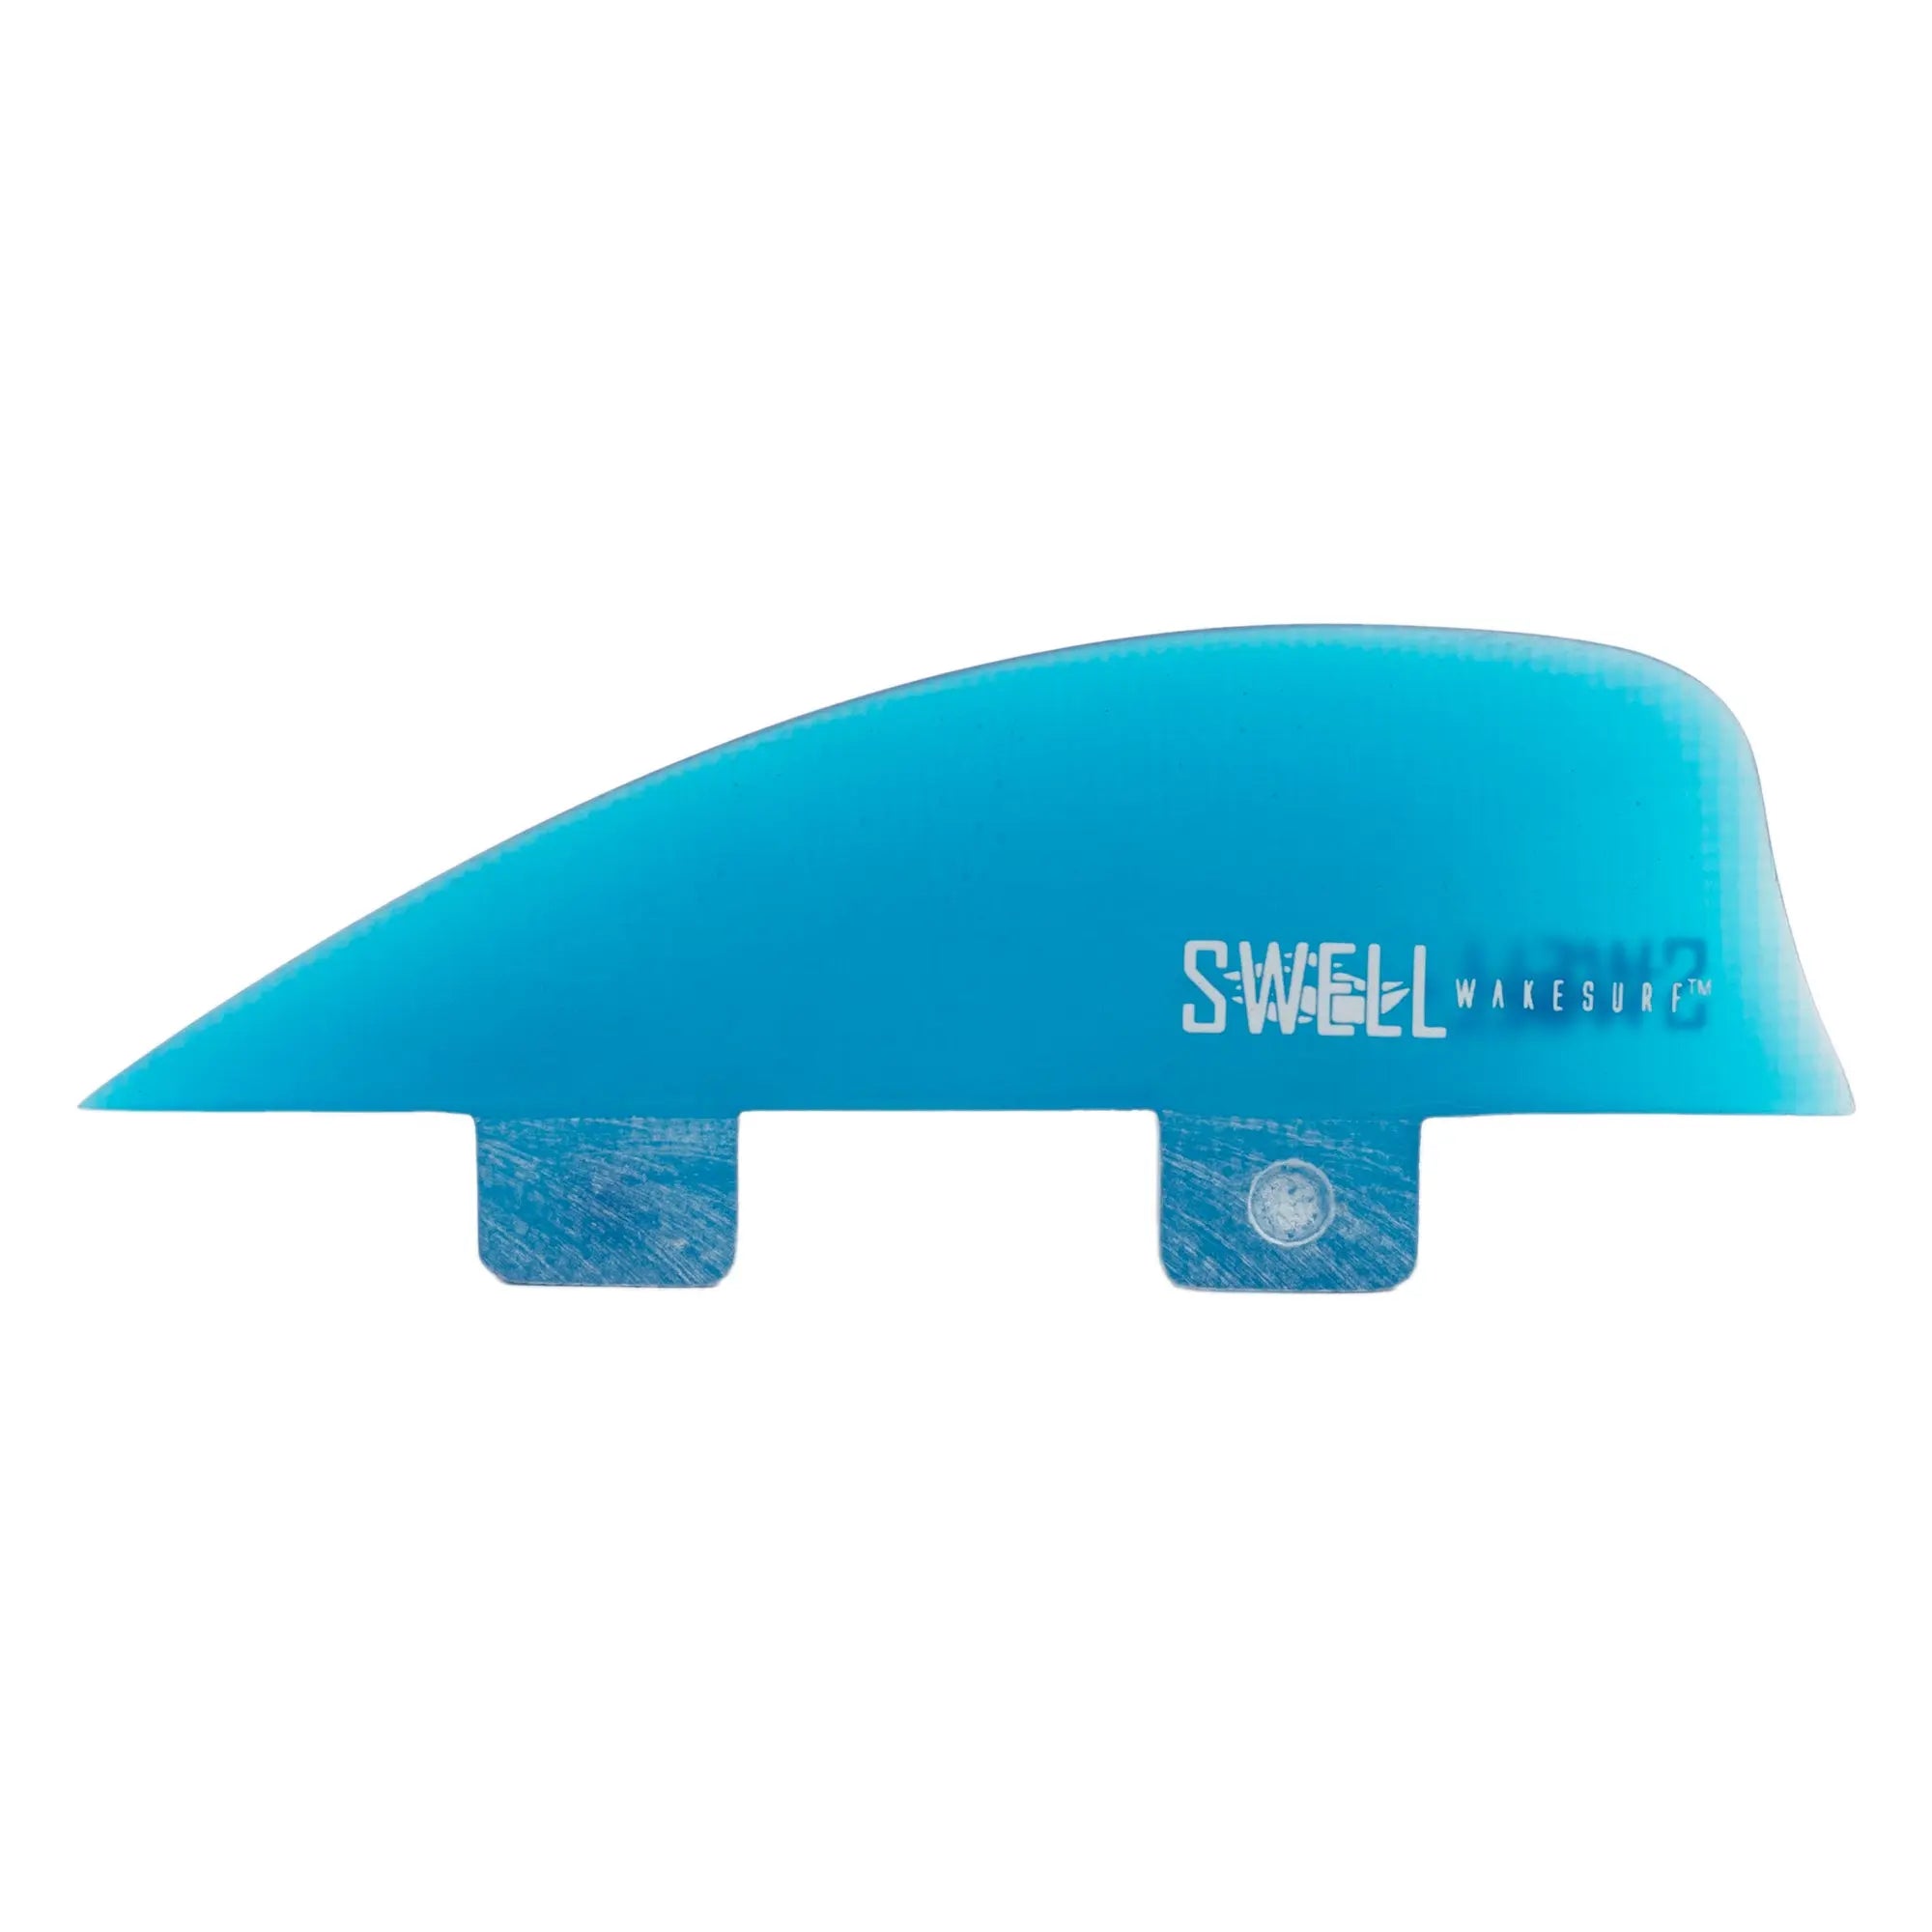 SWELL Wakesurf Fiberglass Fins - Skim Set - 2 Side Fins 1 Center Fin SWELL Wakesurf